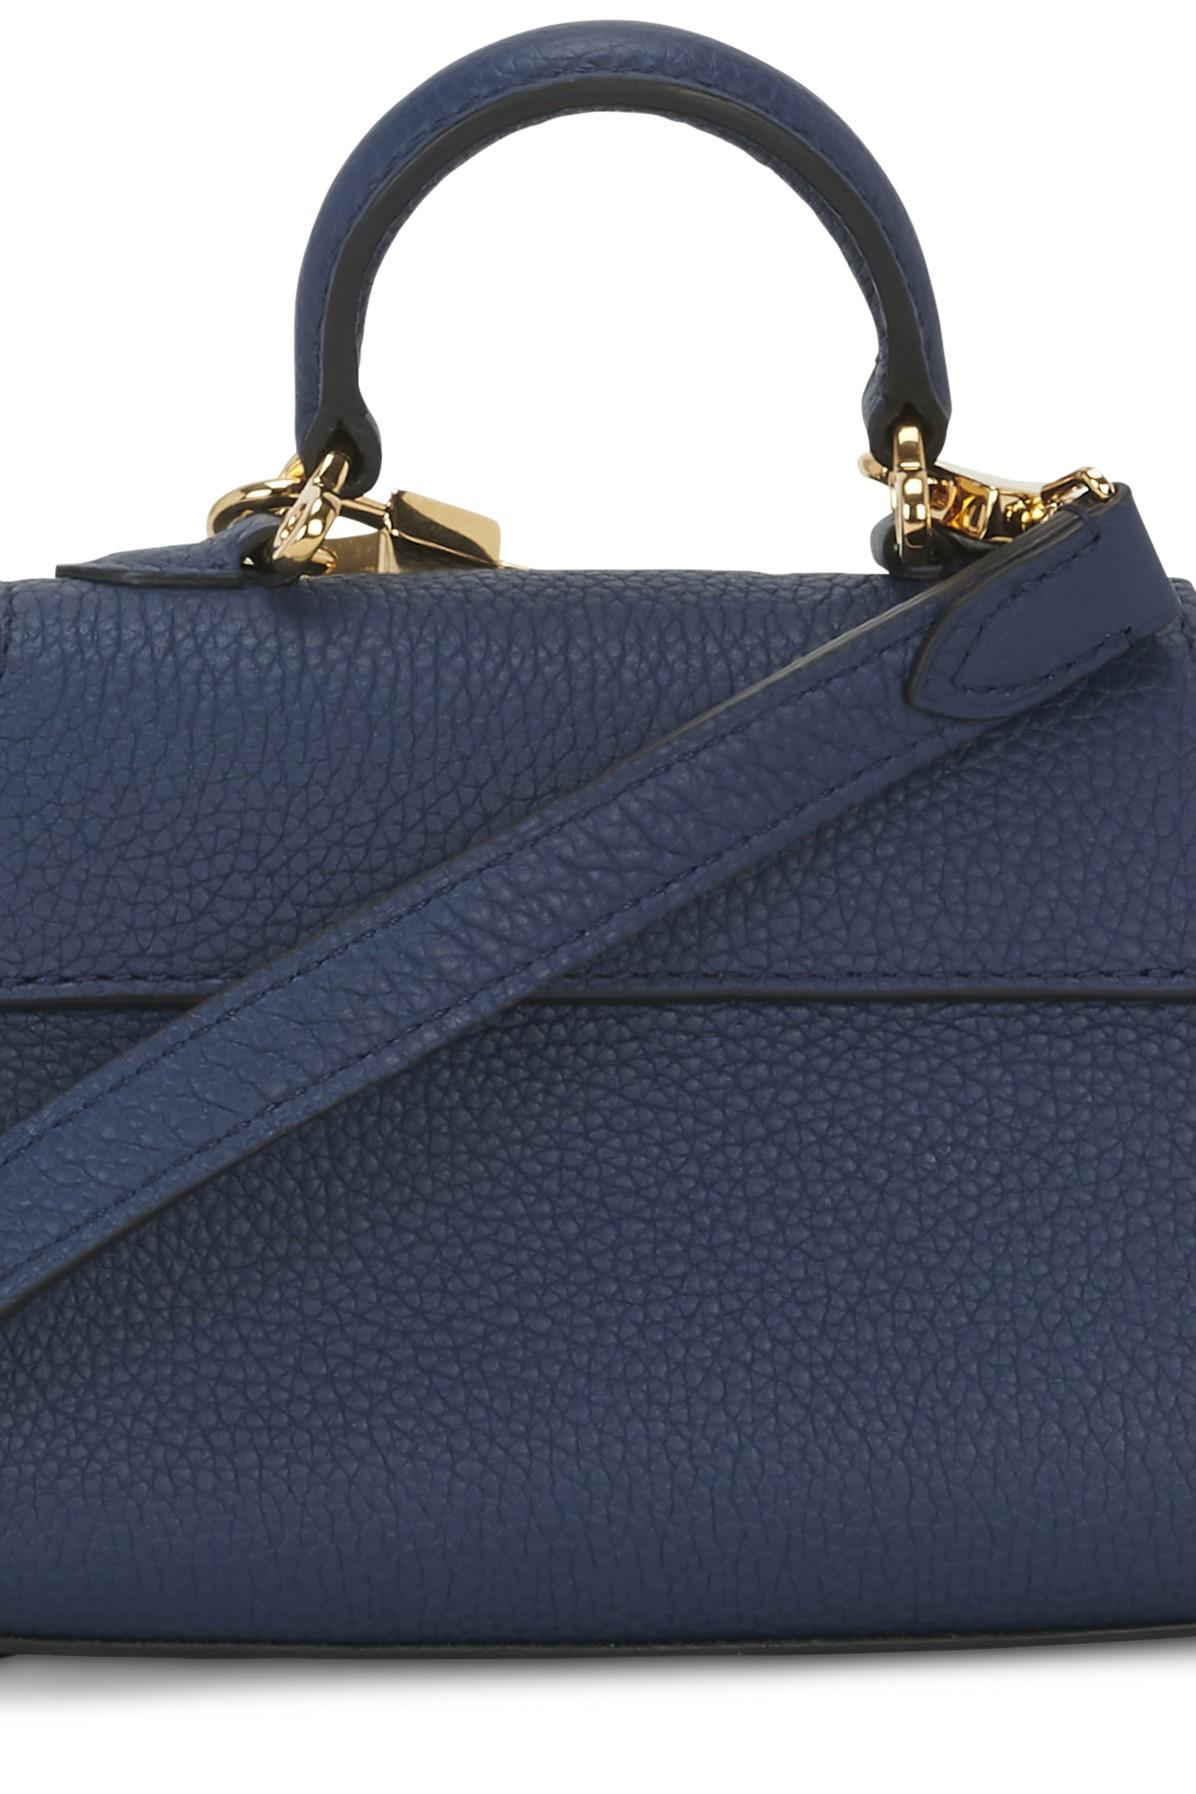 Moynat Paris - Réjane Nano Handbag - Blue - in Leather - Luxury